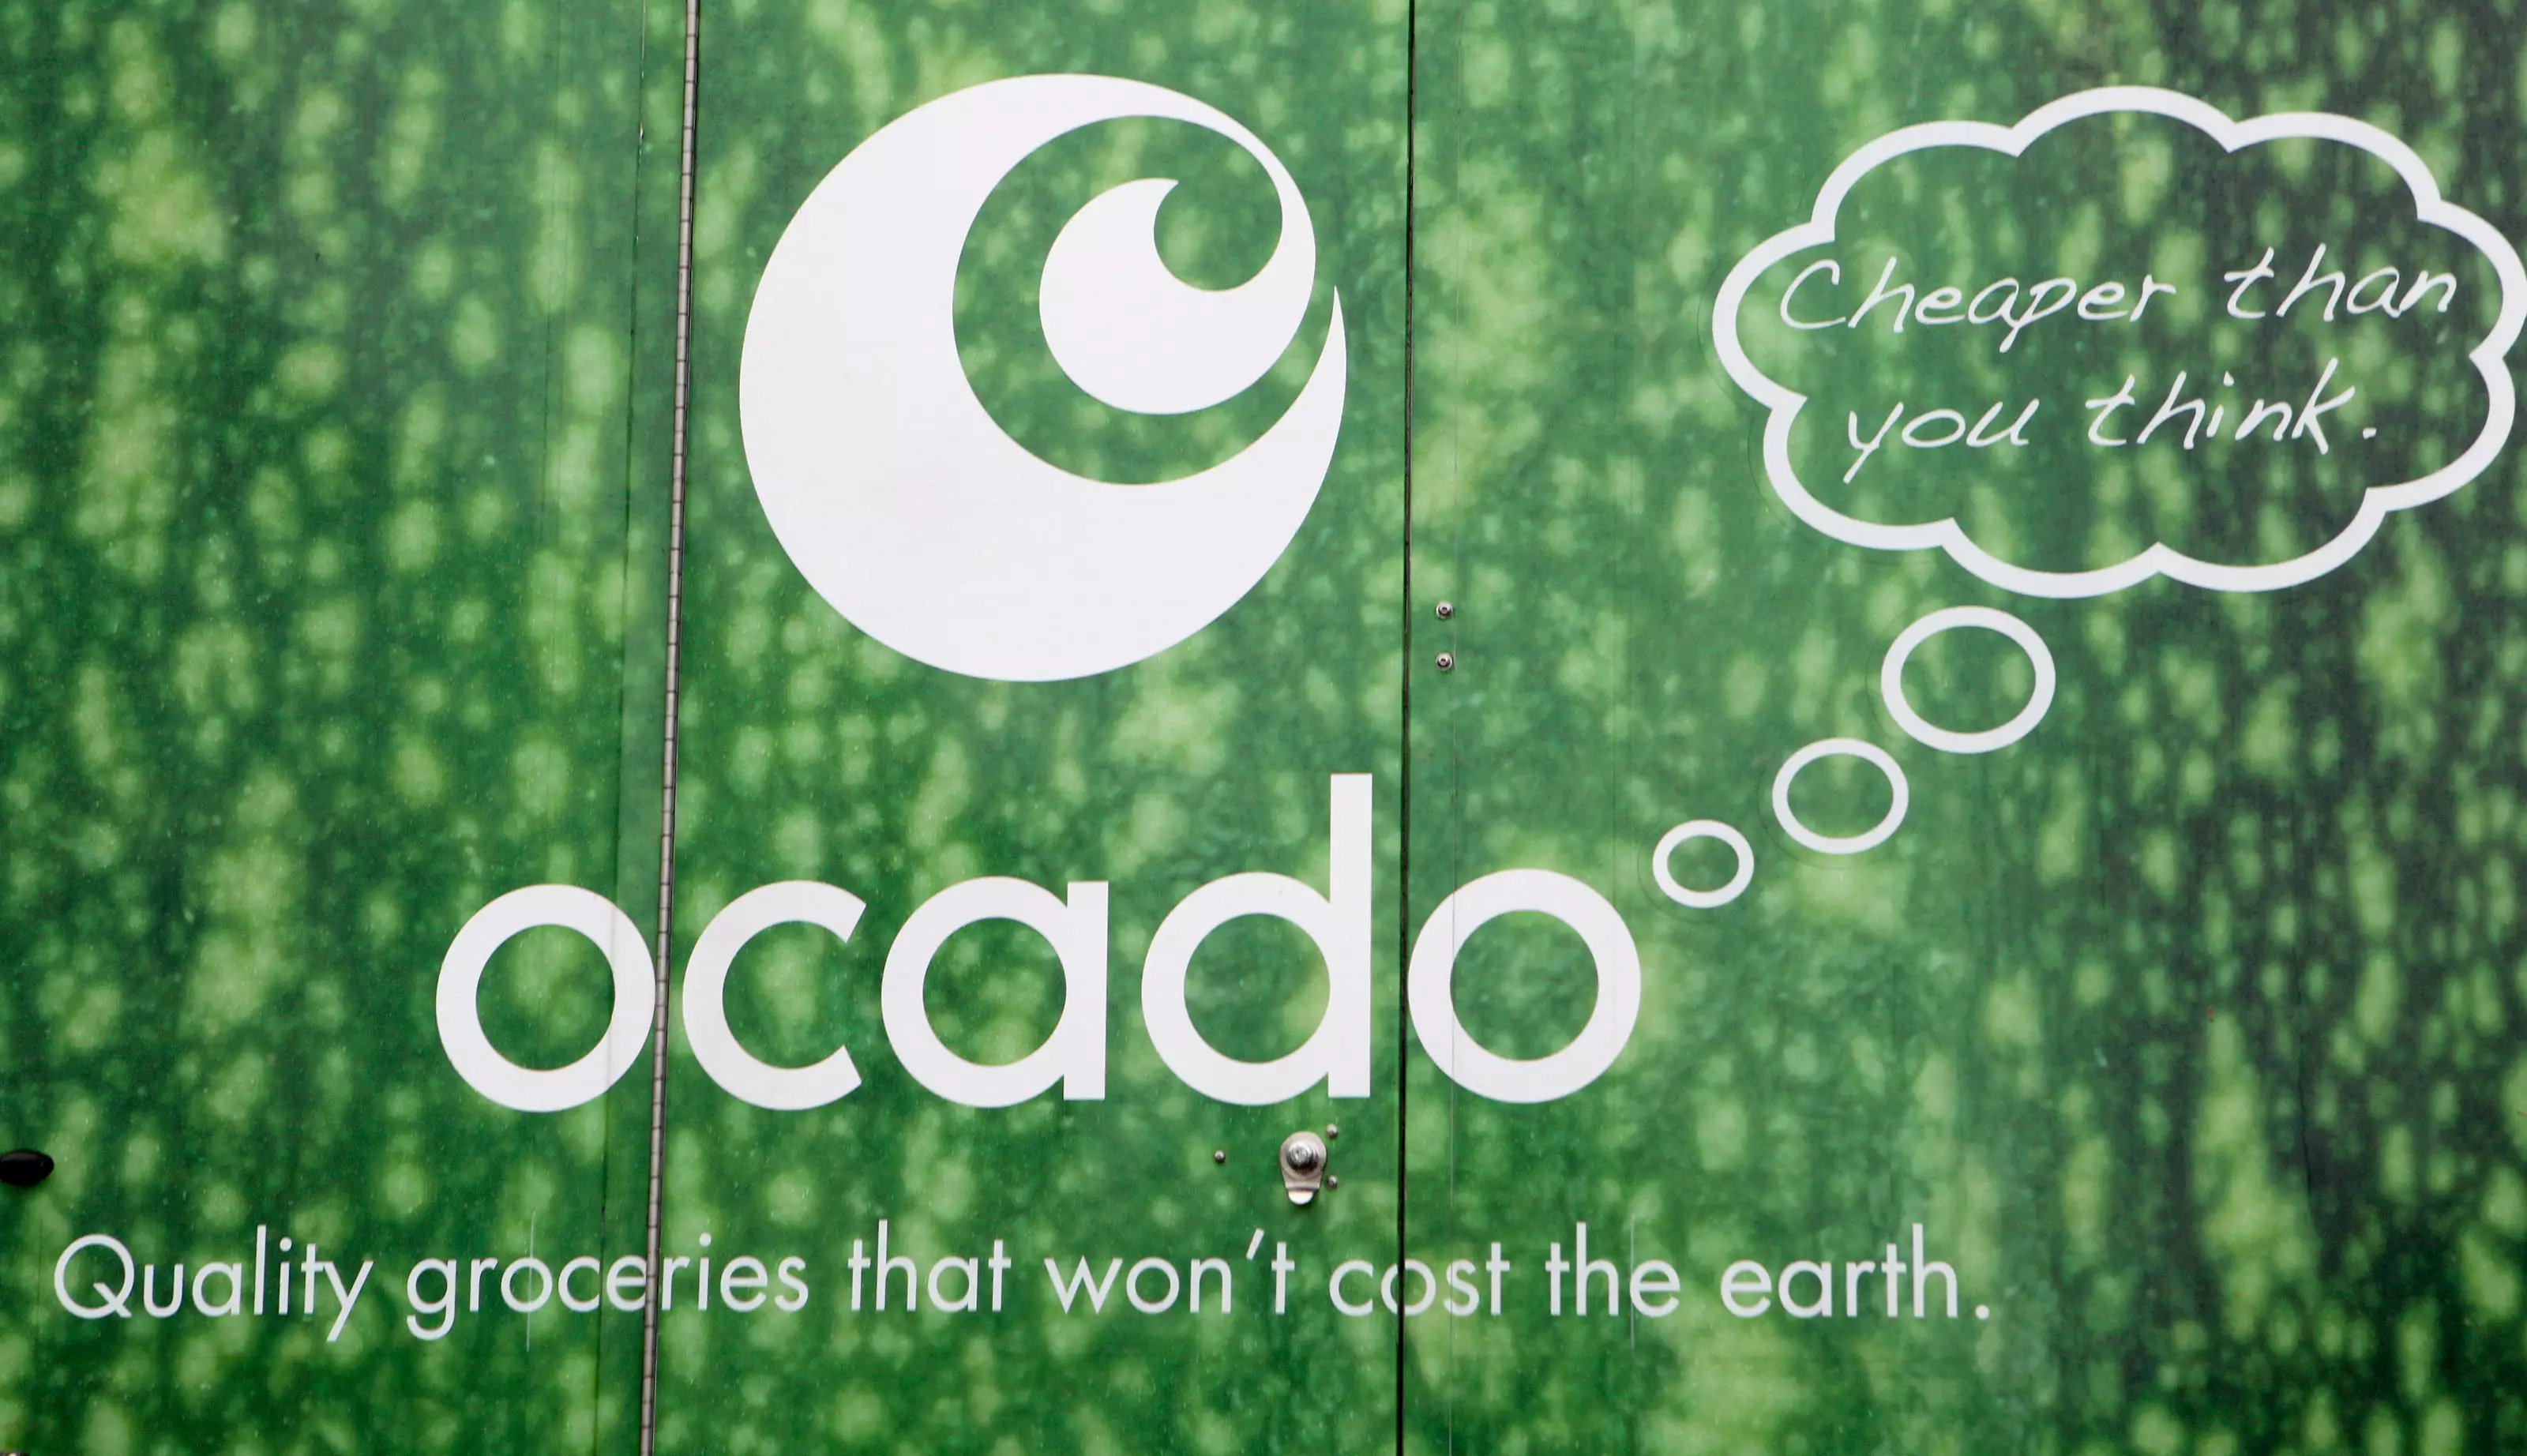 Ocado apologised for the error.